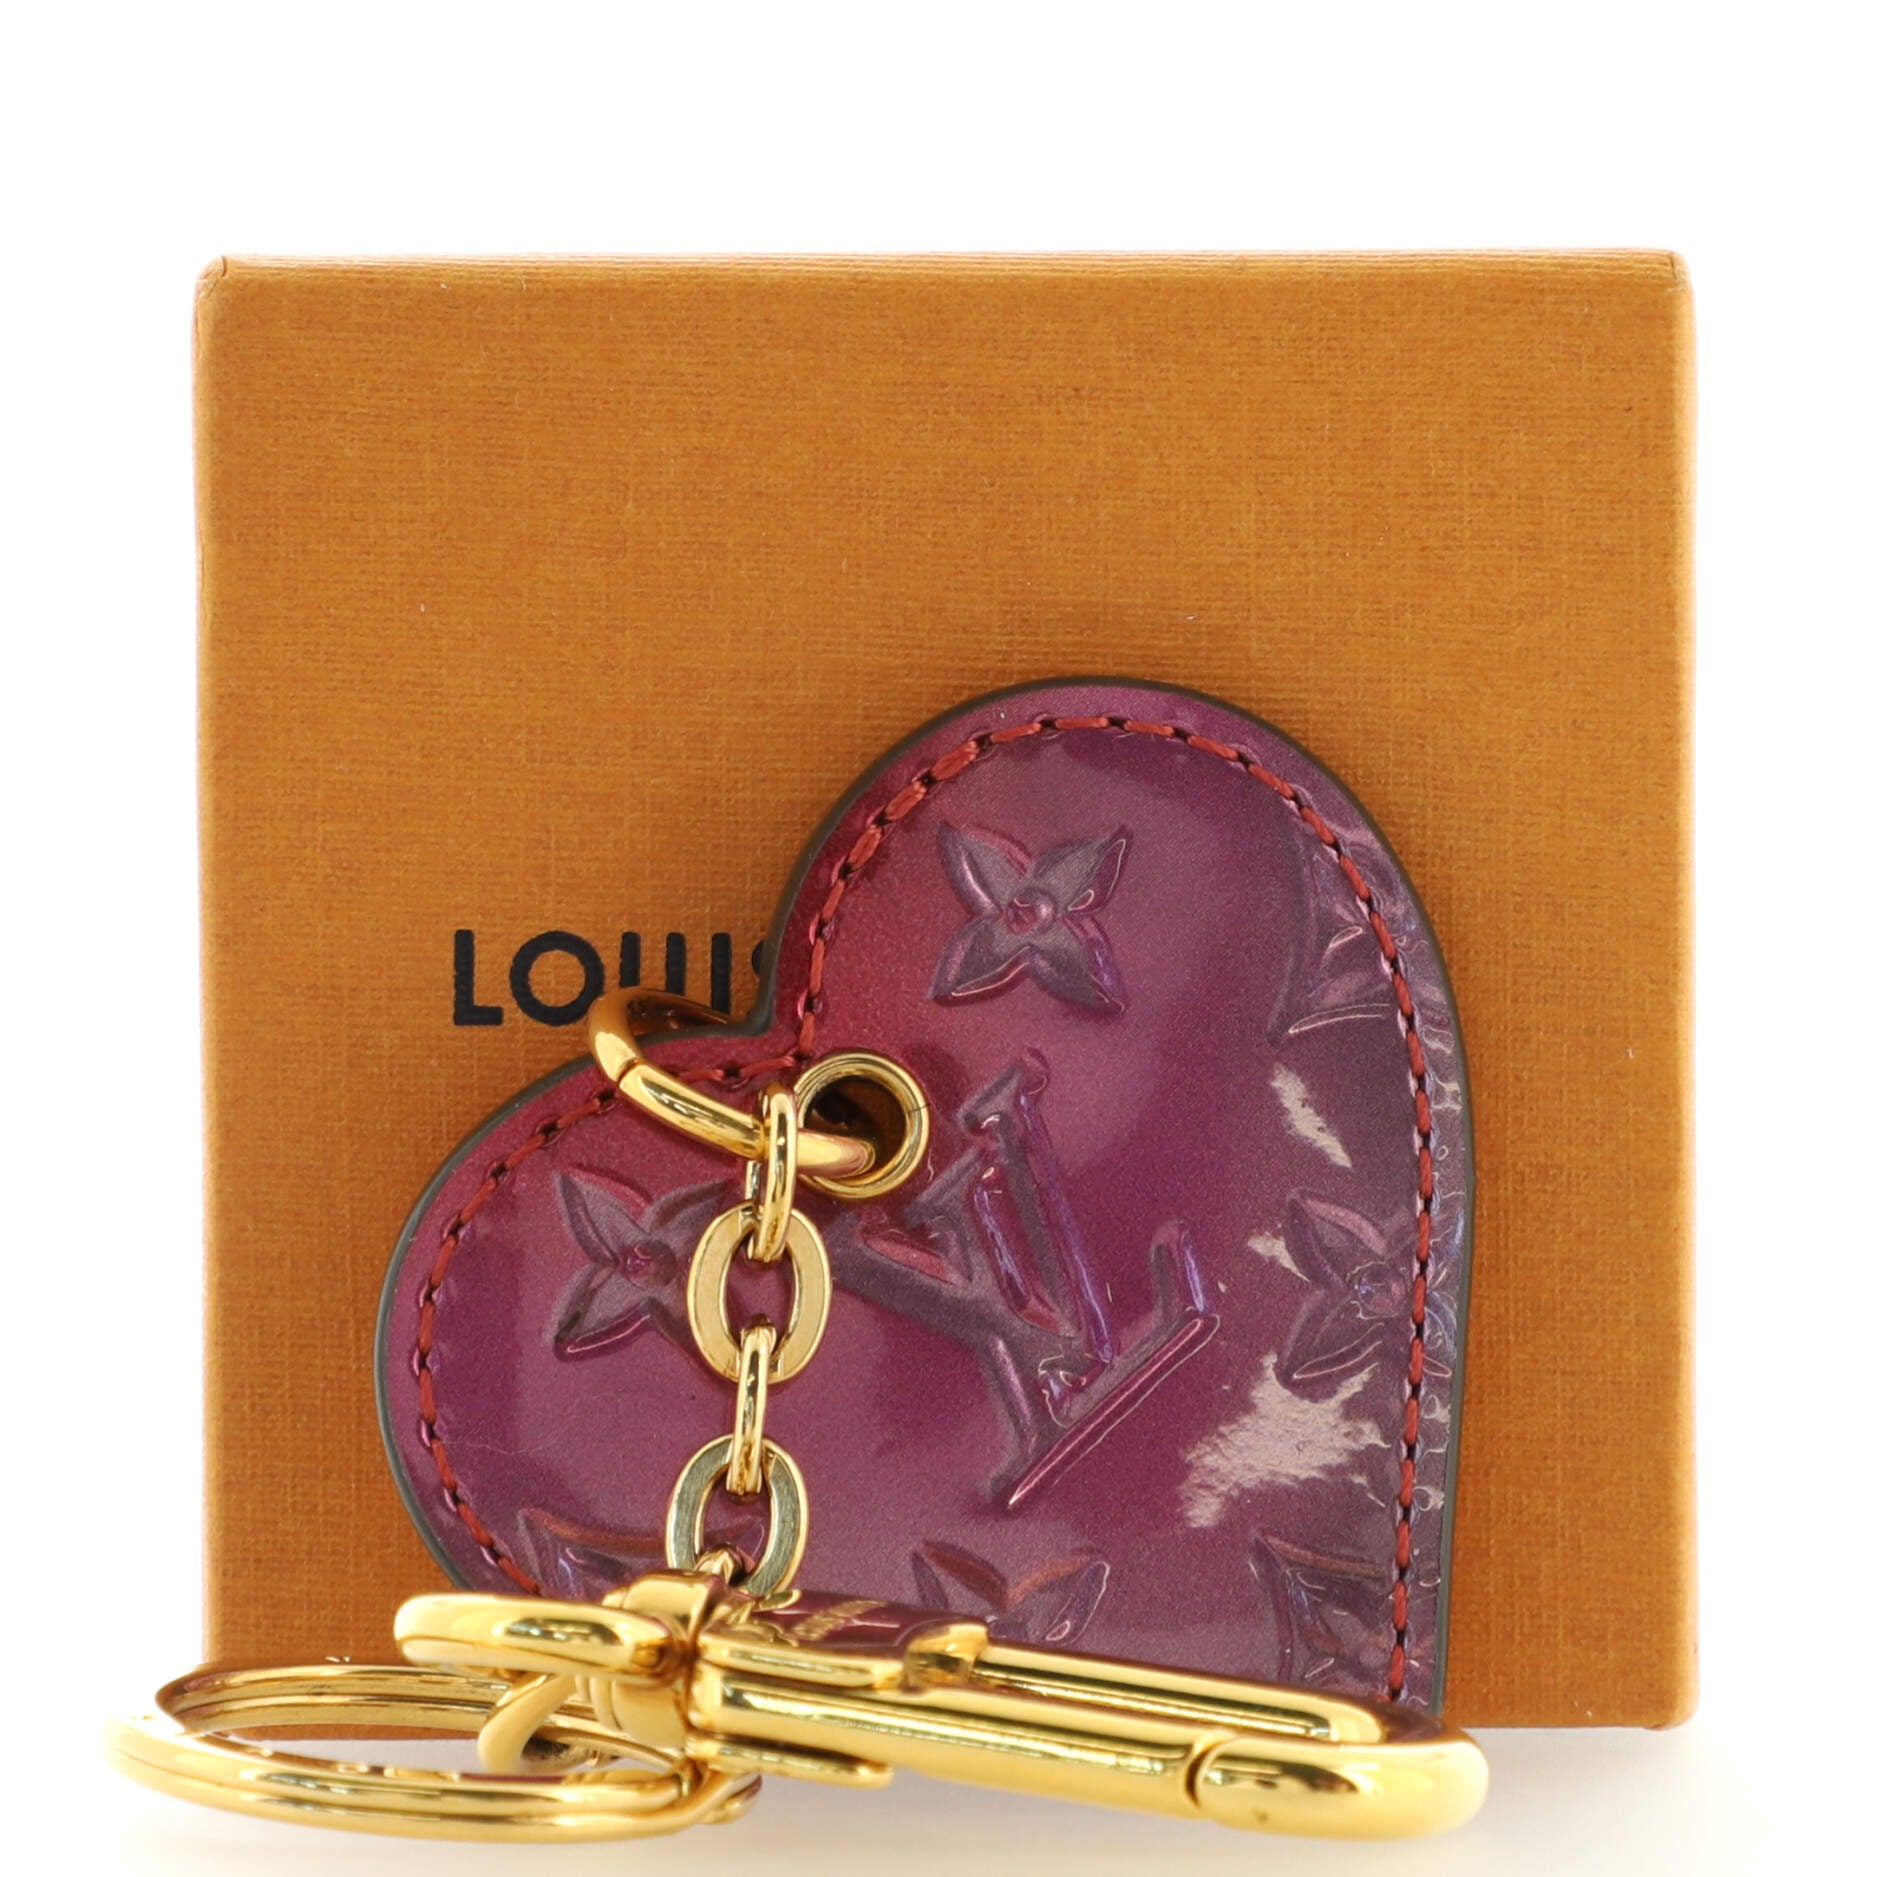 Louis Vuitton Heart Coin Purse Limited Edition Degrade Monogram